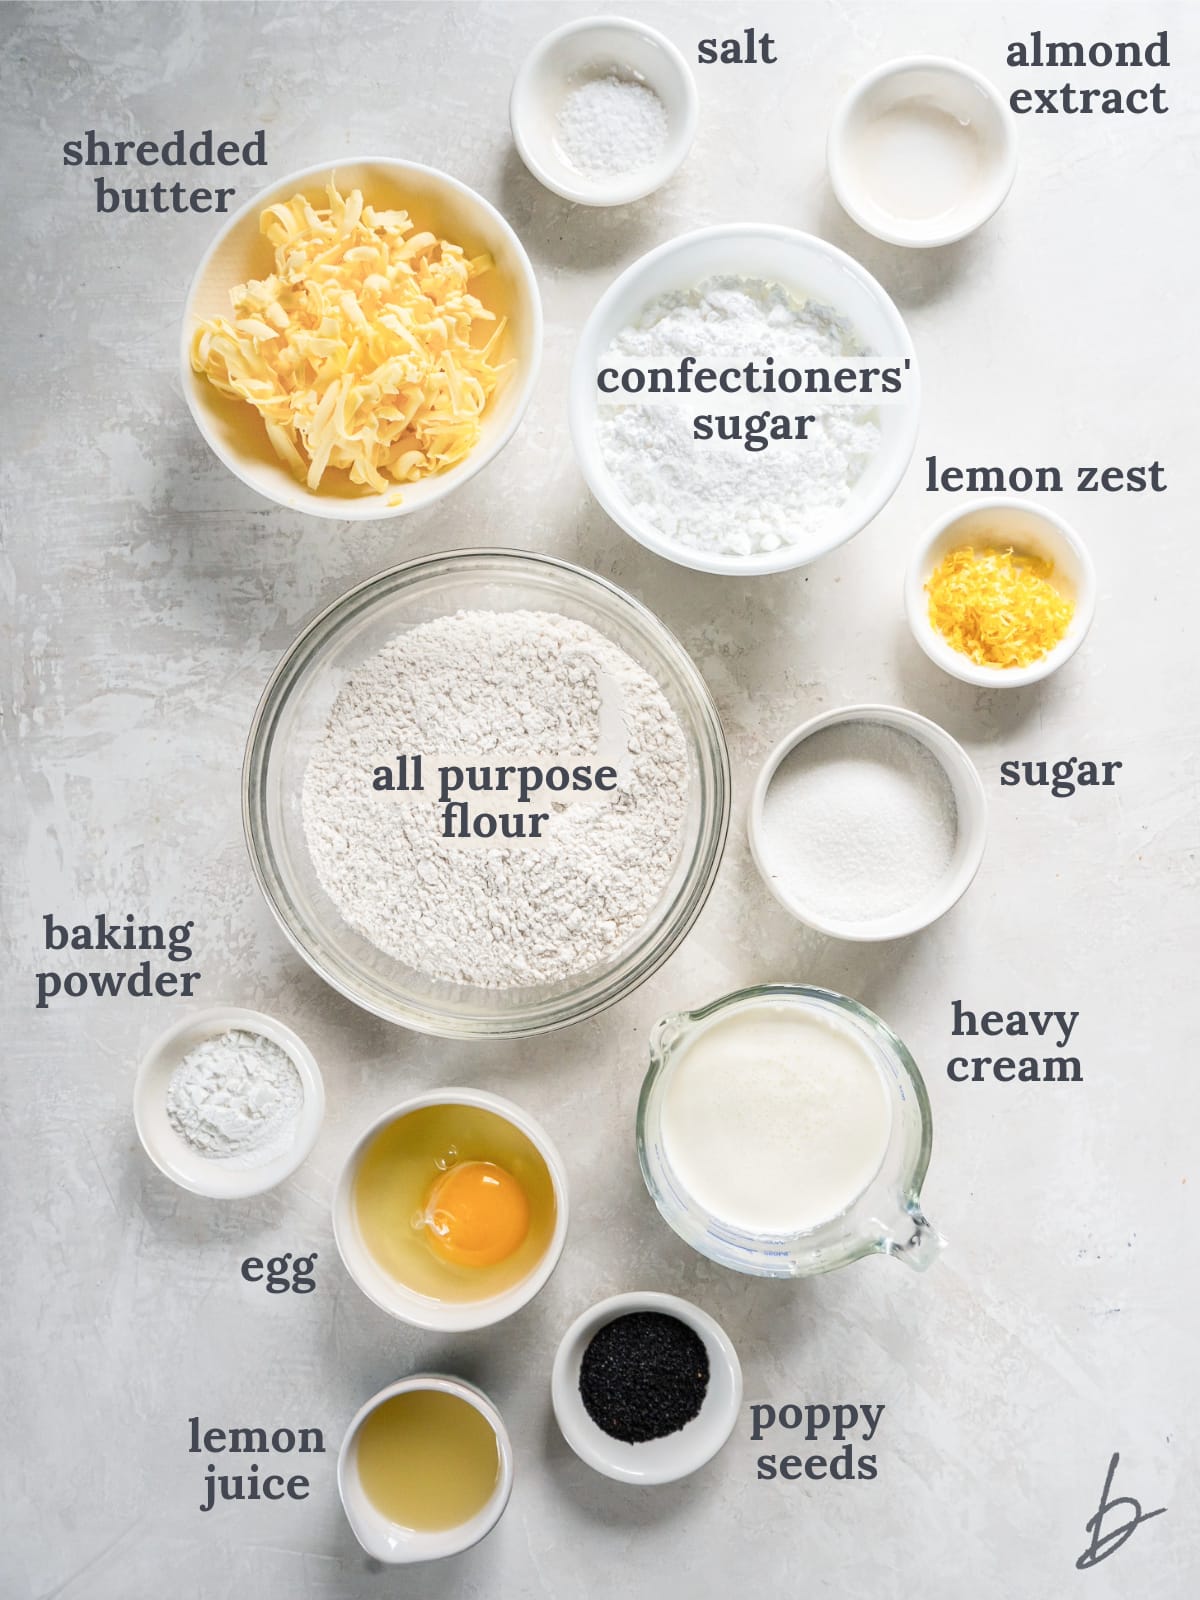 bowls of ingredients to make lemon poppy seed scones.